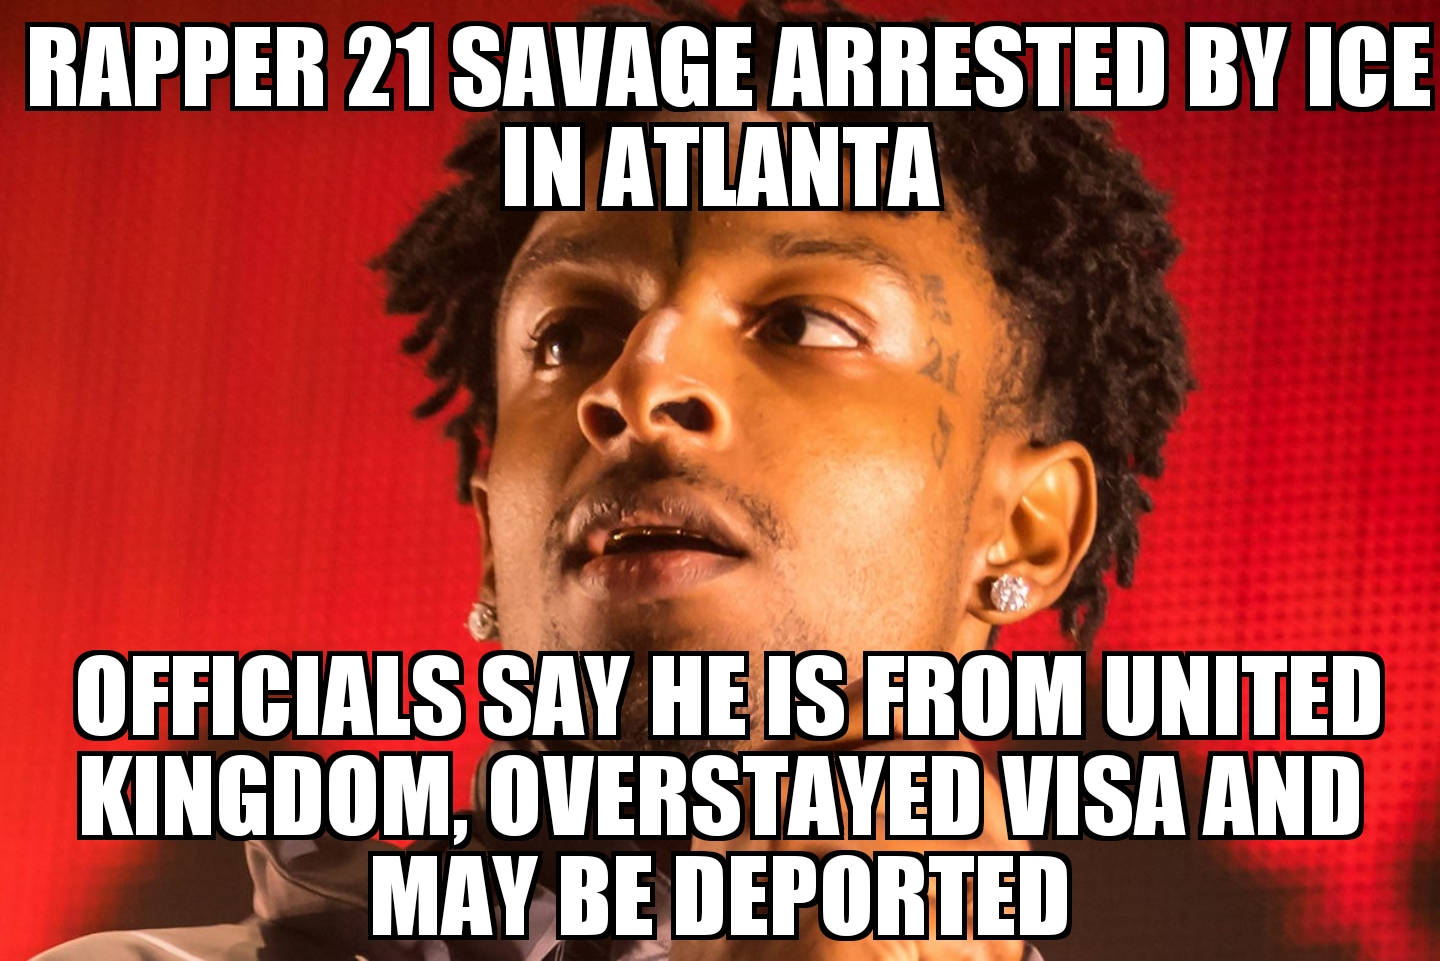 ICE arrests 21 Savage